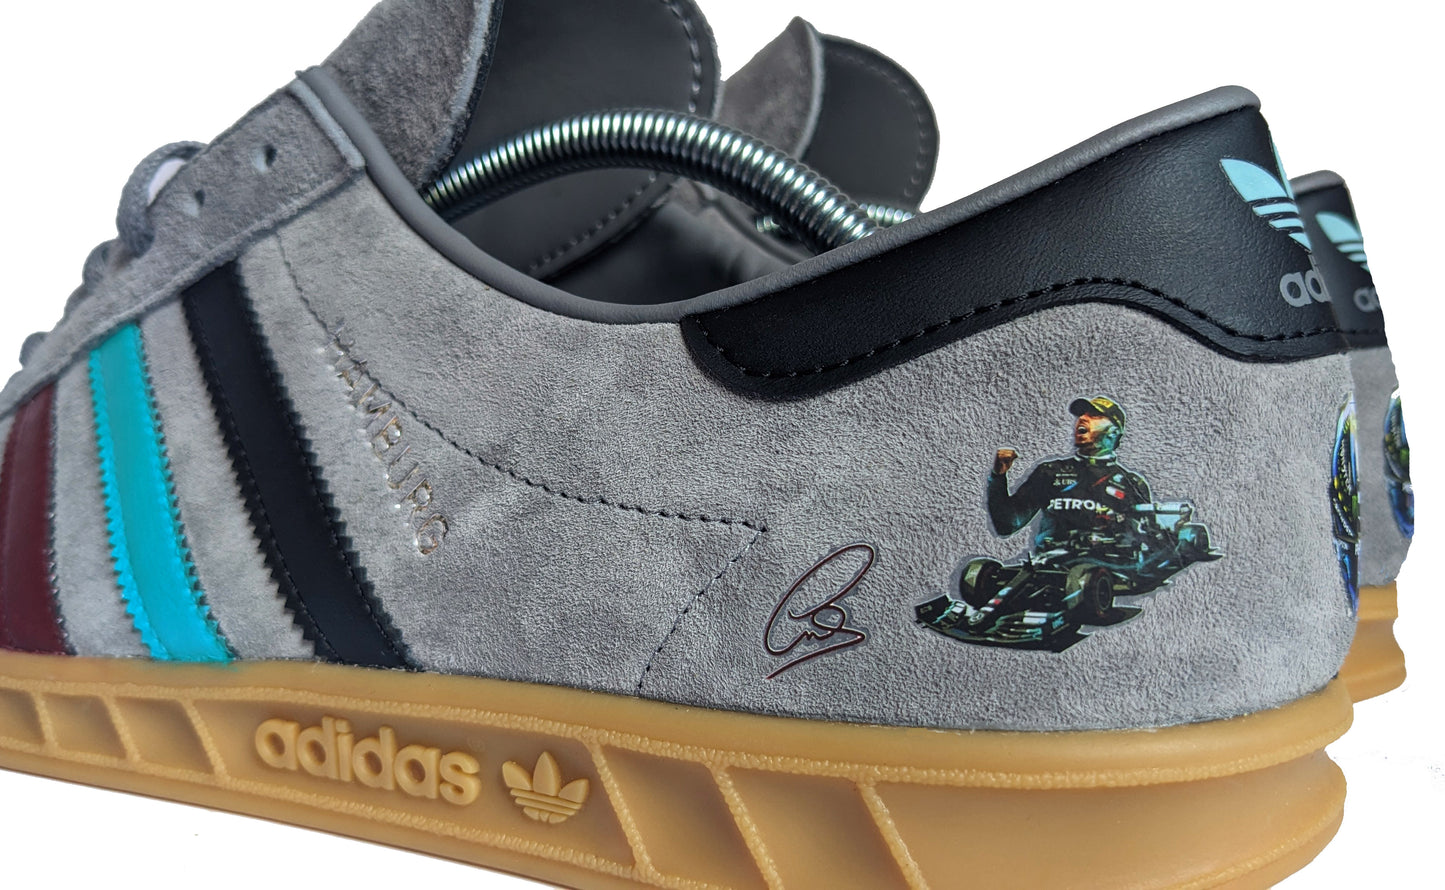 Limited edition F1 Lewis Hamilton grey / black Adidas custom Hamburg trainers / sneakers